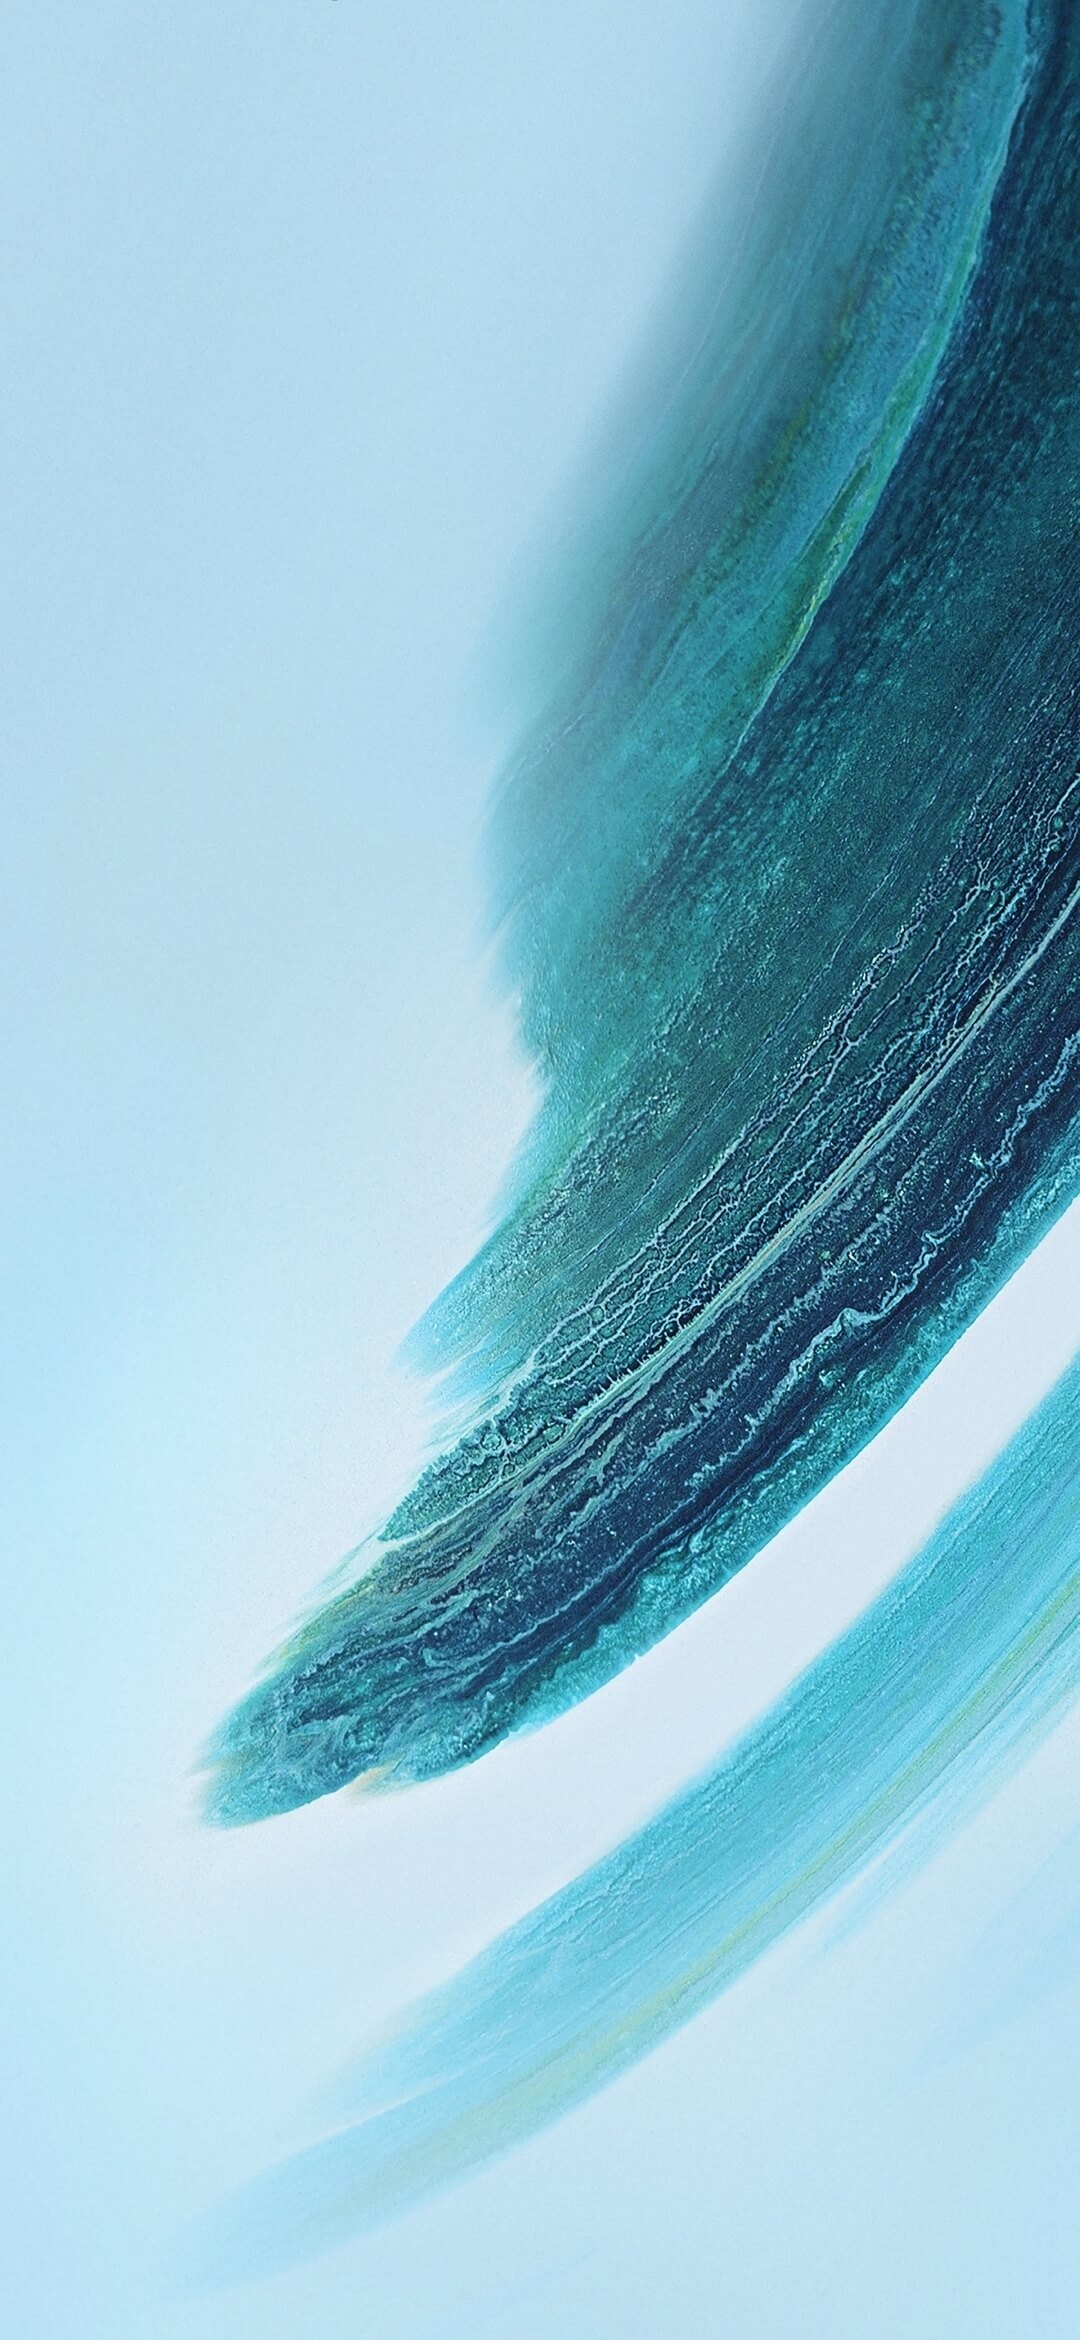 Обои iPhone 13 Official Stock Wallpaper in High Resolution (Blue) – Light  для HD Samsung Galaxy S3/J3/J4/J5, Meizu M5, Sony Xperia L1/L2 бесплатно,  заставка 720x1280 - скачать картинки и фото